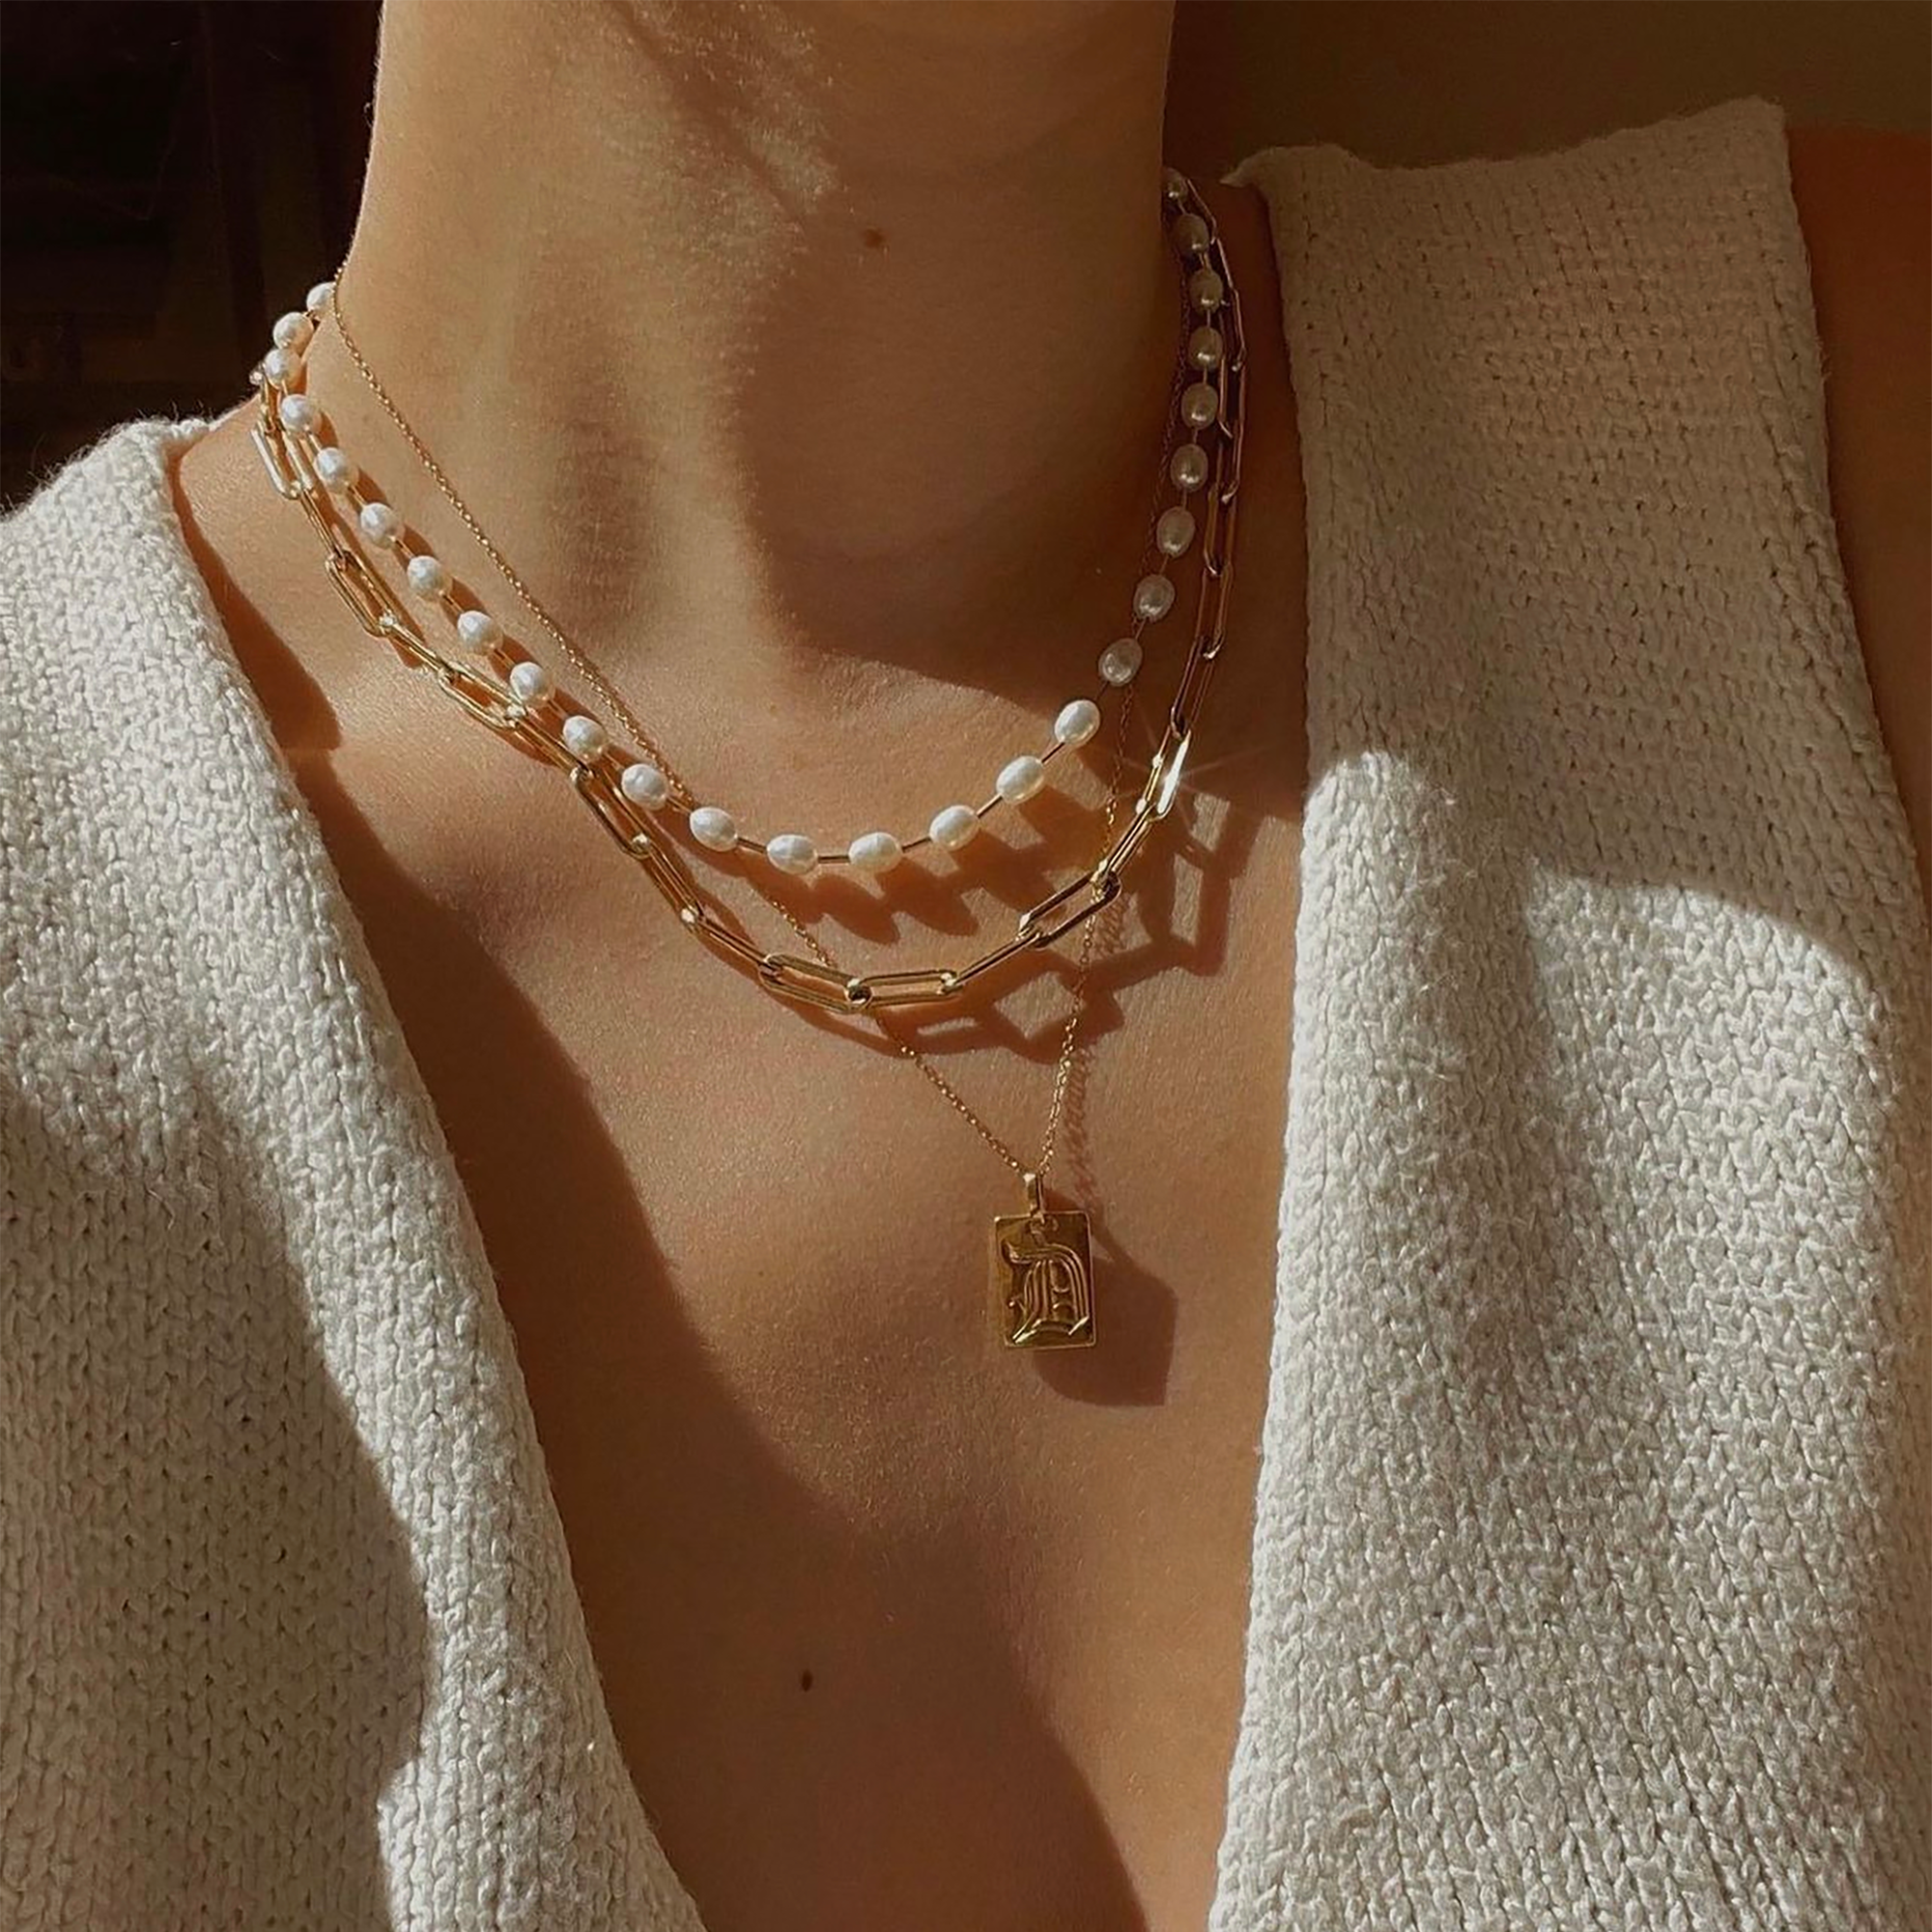 DIY colliers Arizona - Perles à tout va